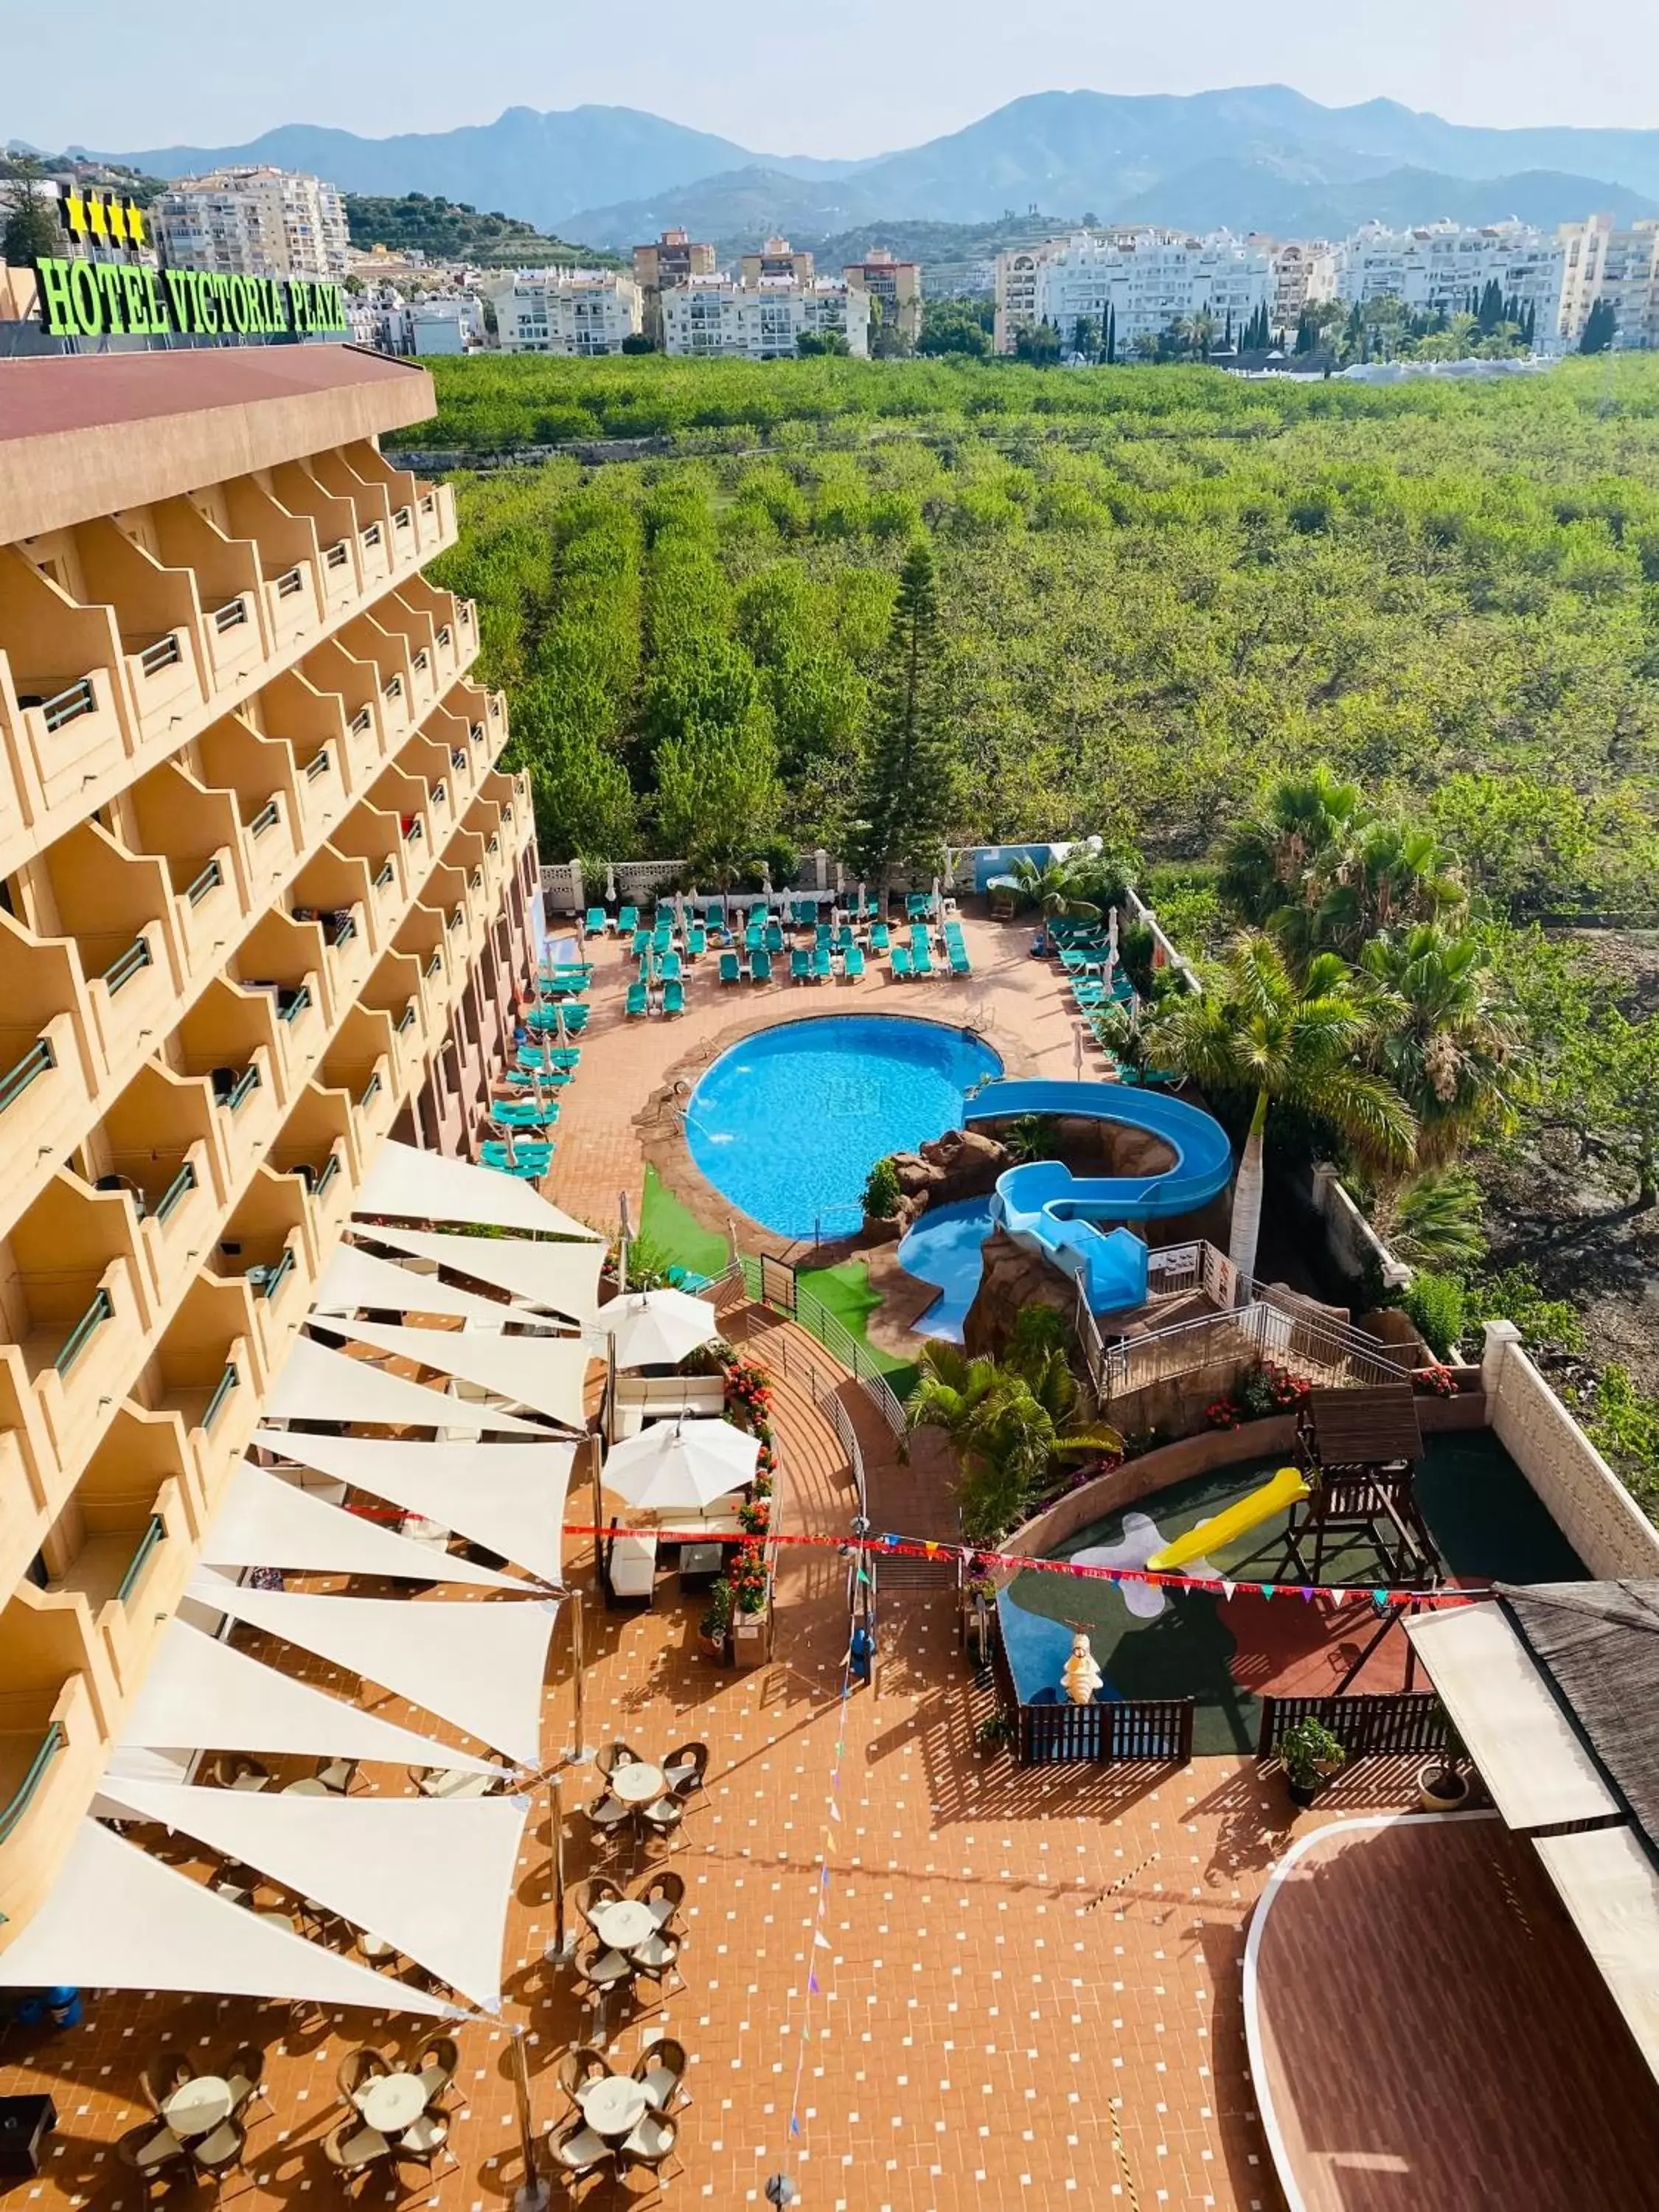 Pool view in Hotel Victoria Playa